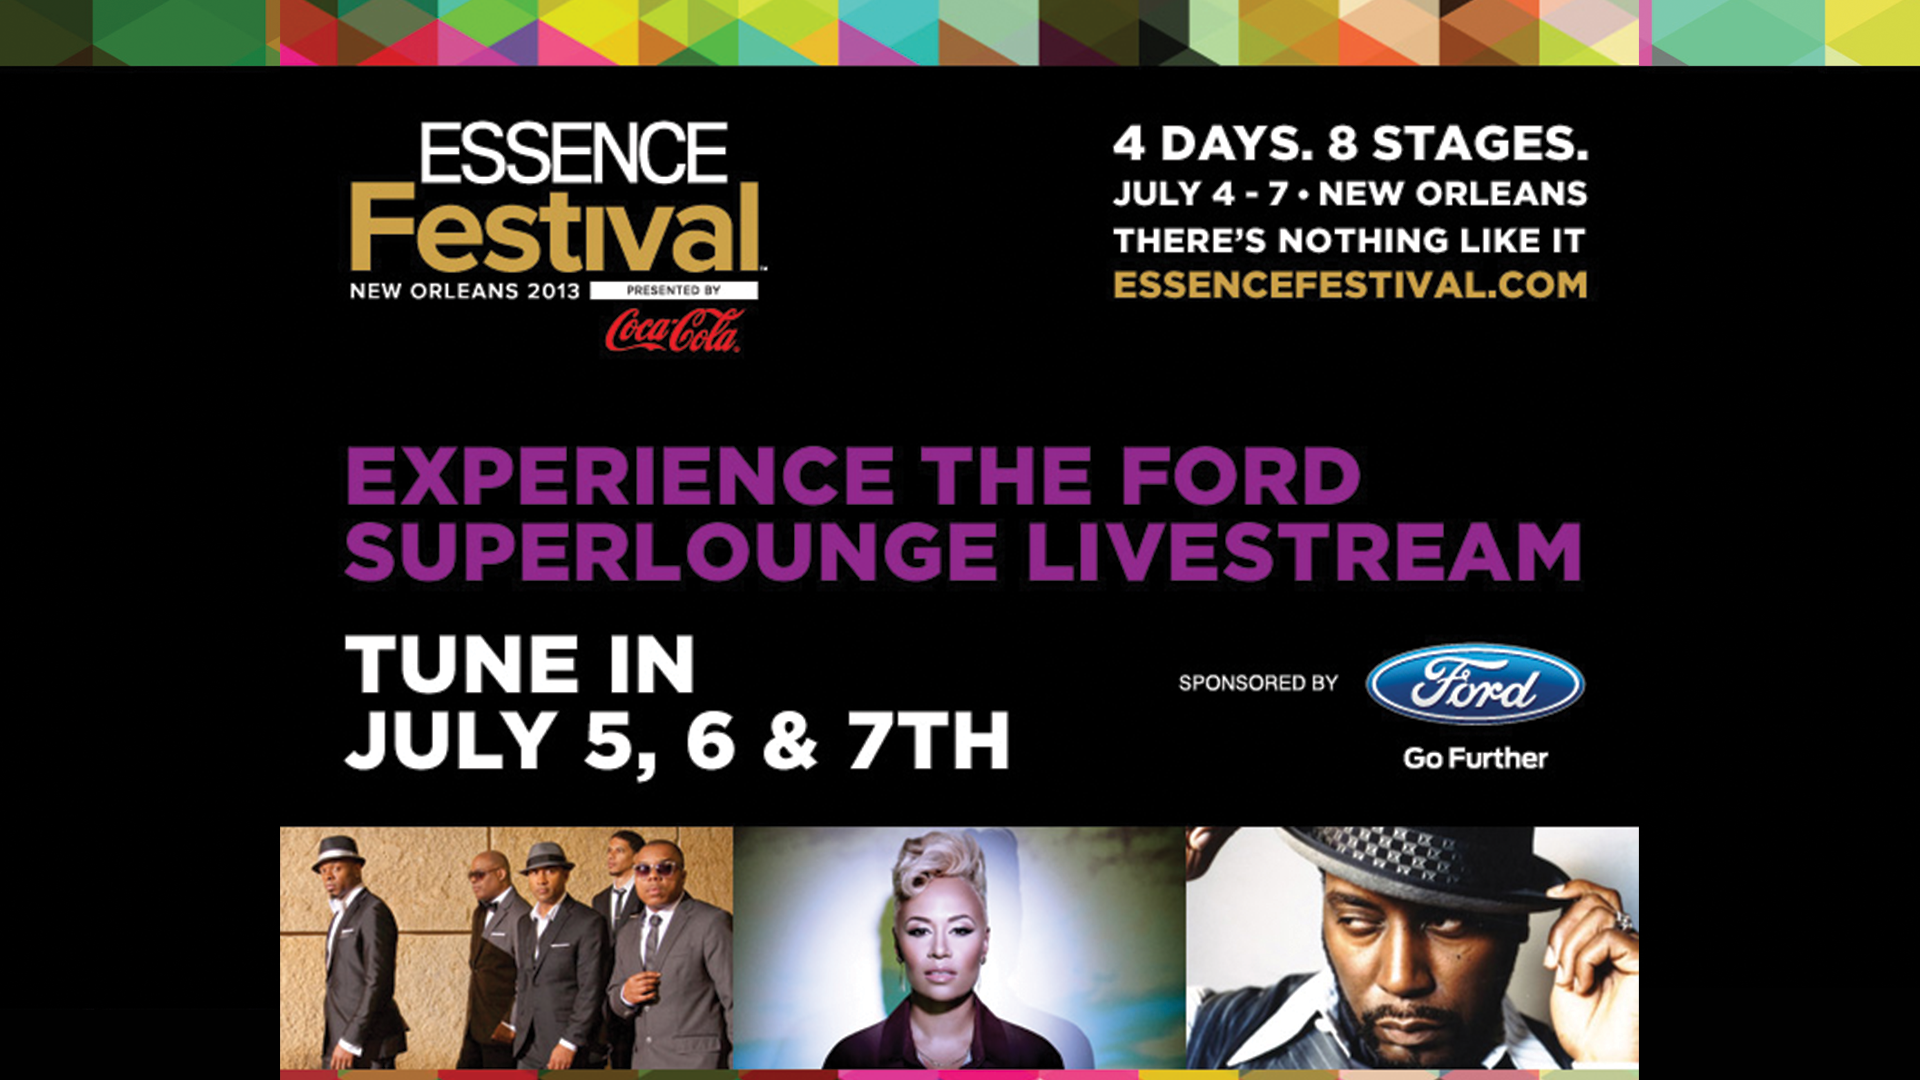 ESSENCE Festival™ Livestream from the Ford Superlounge on Livestream